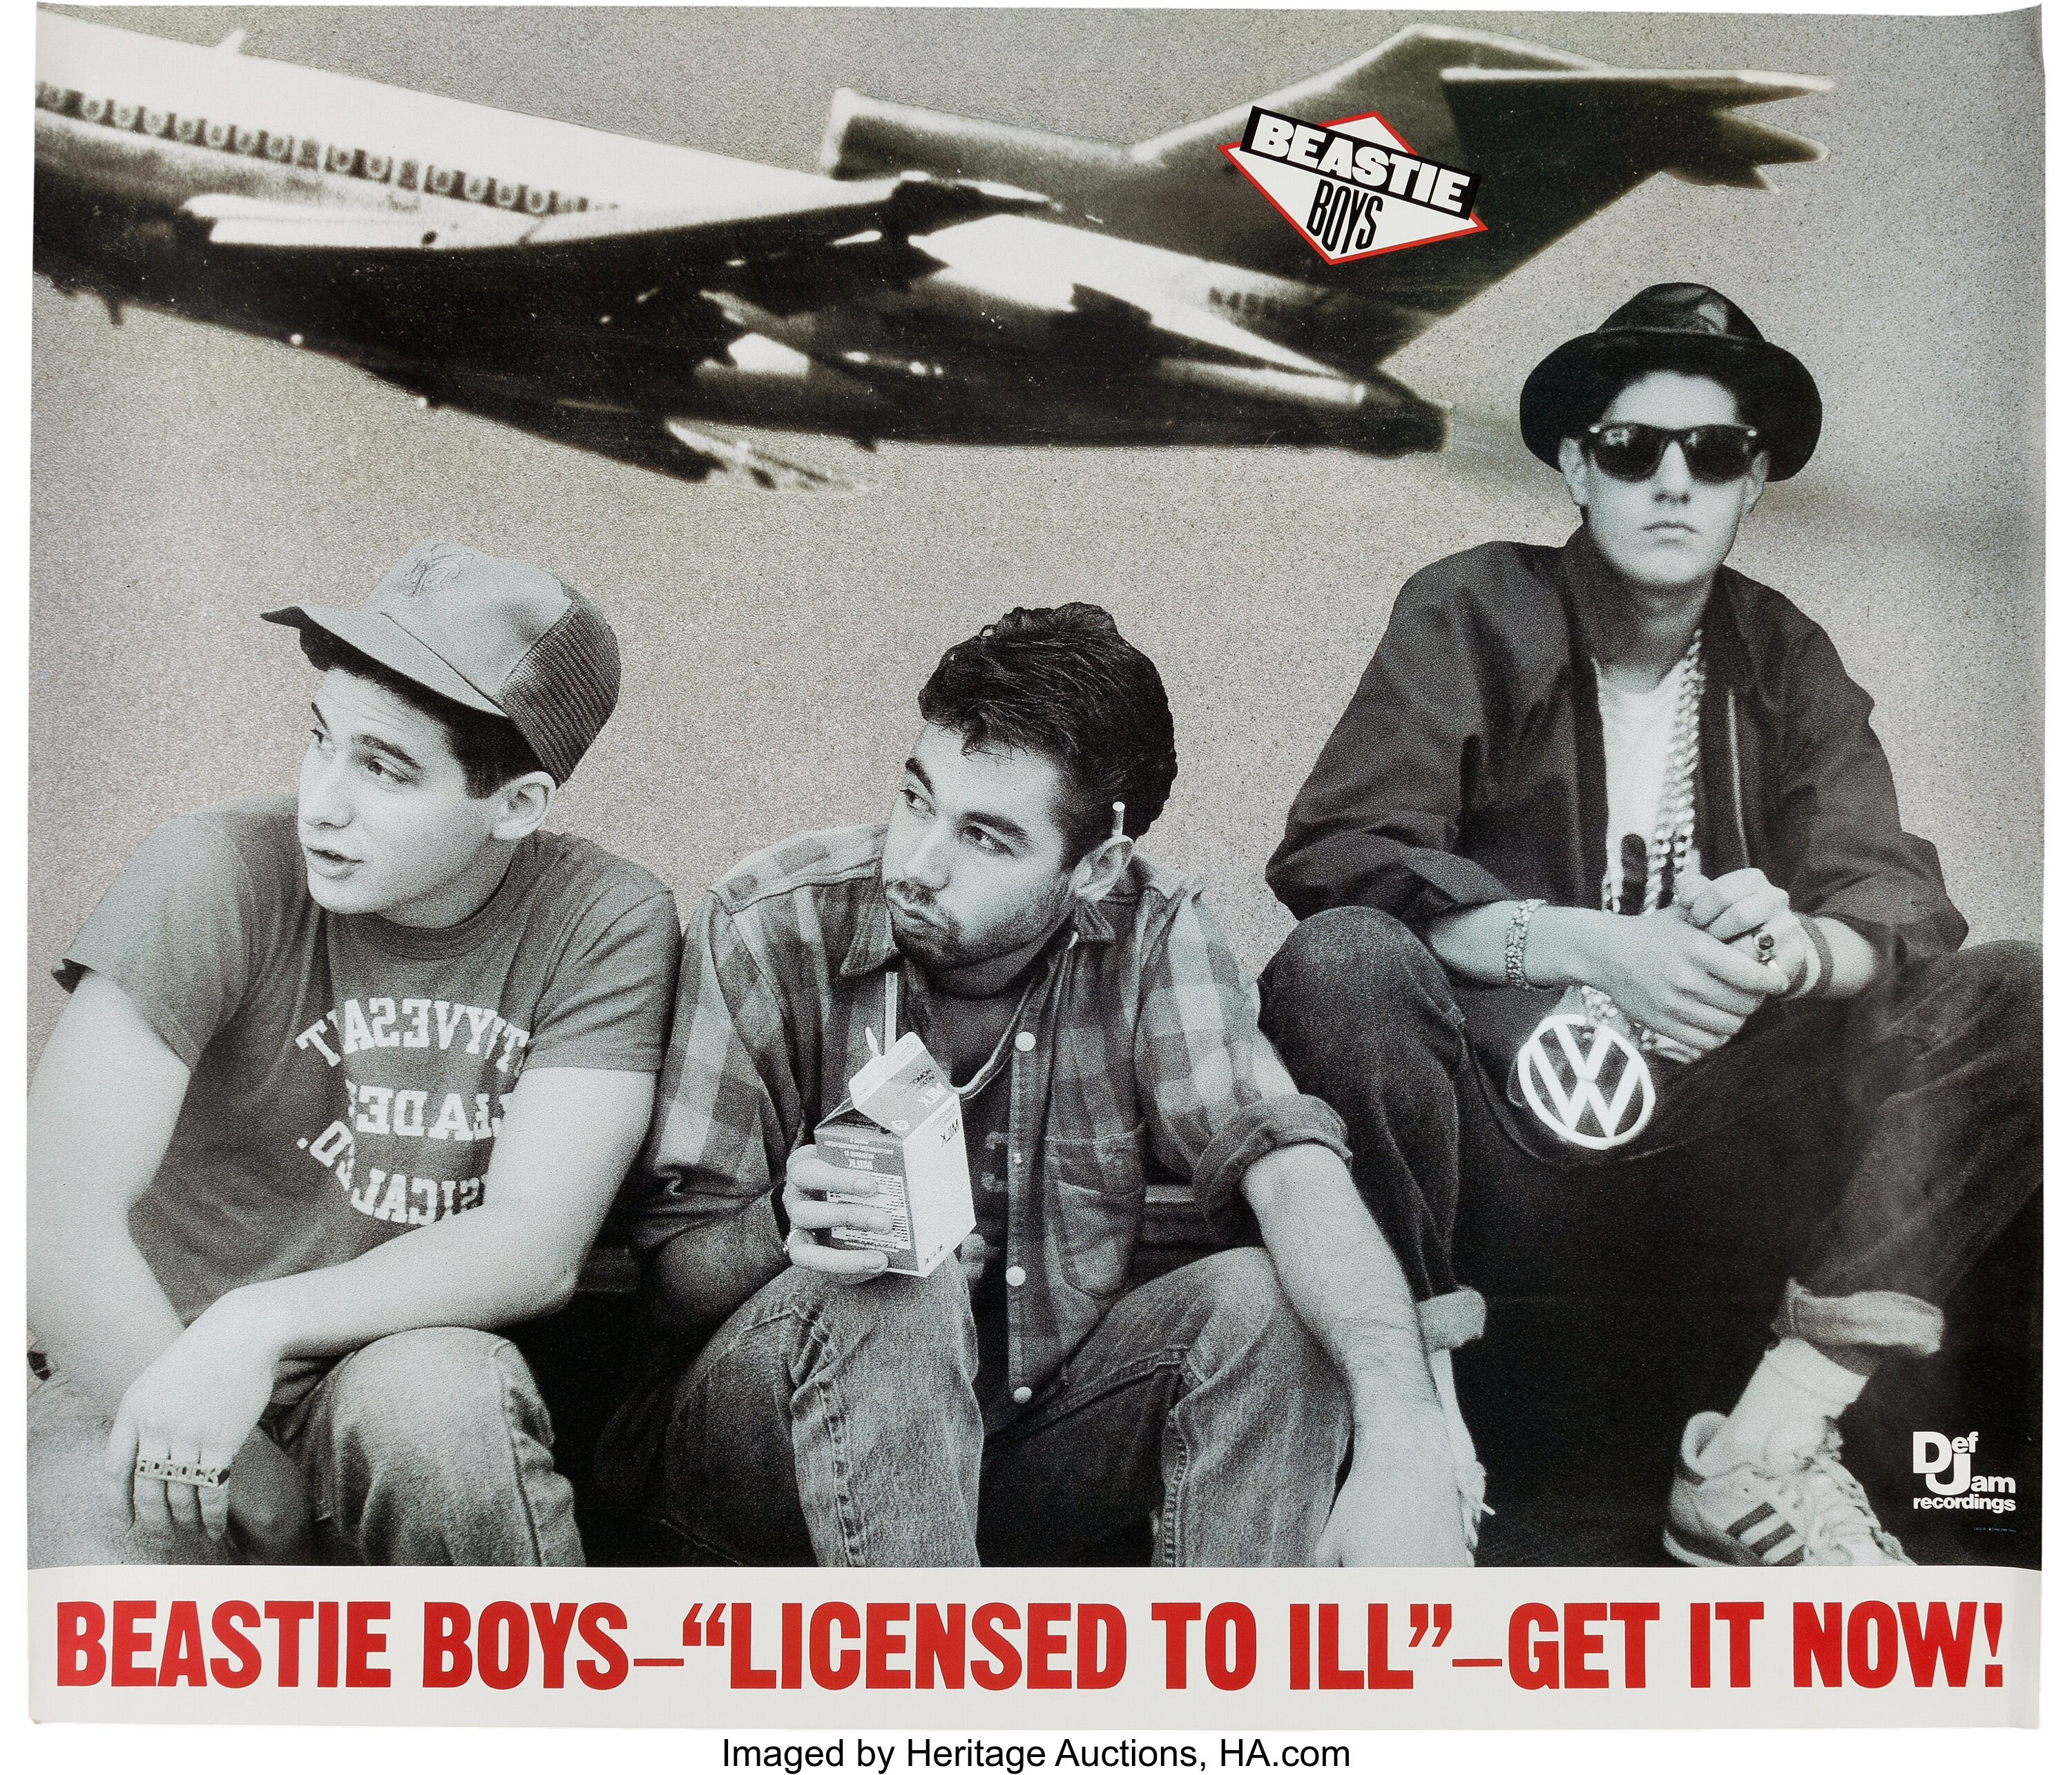 License To Ill Beastie Boys